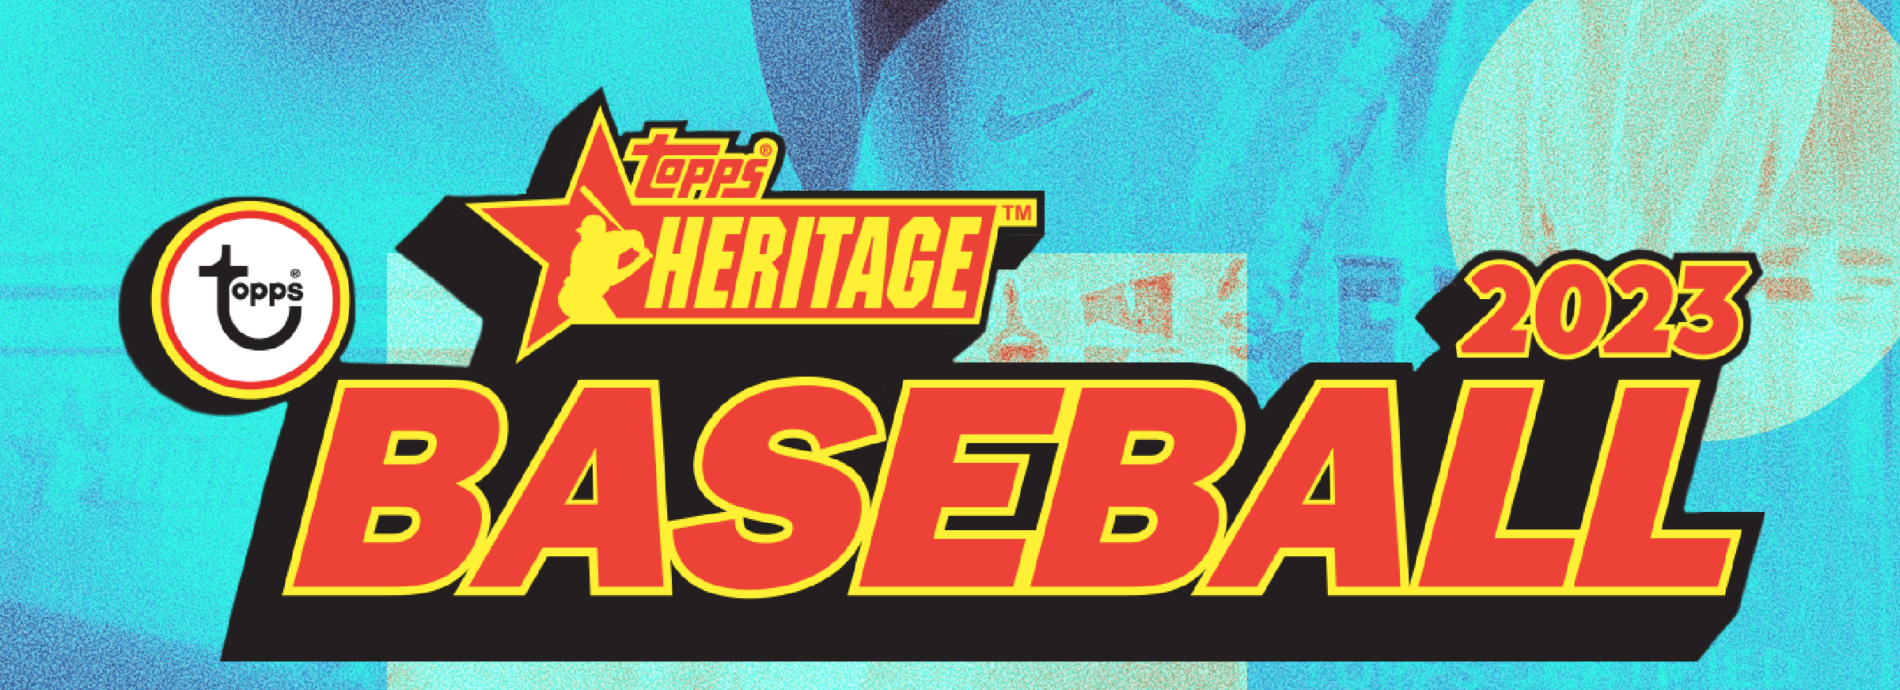 Brand History: Topps Heritage Baseball - Topps Ripped